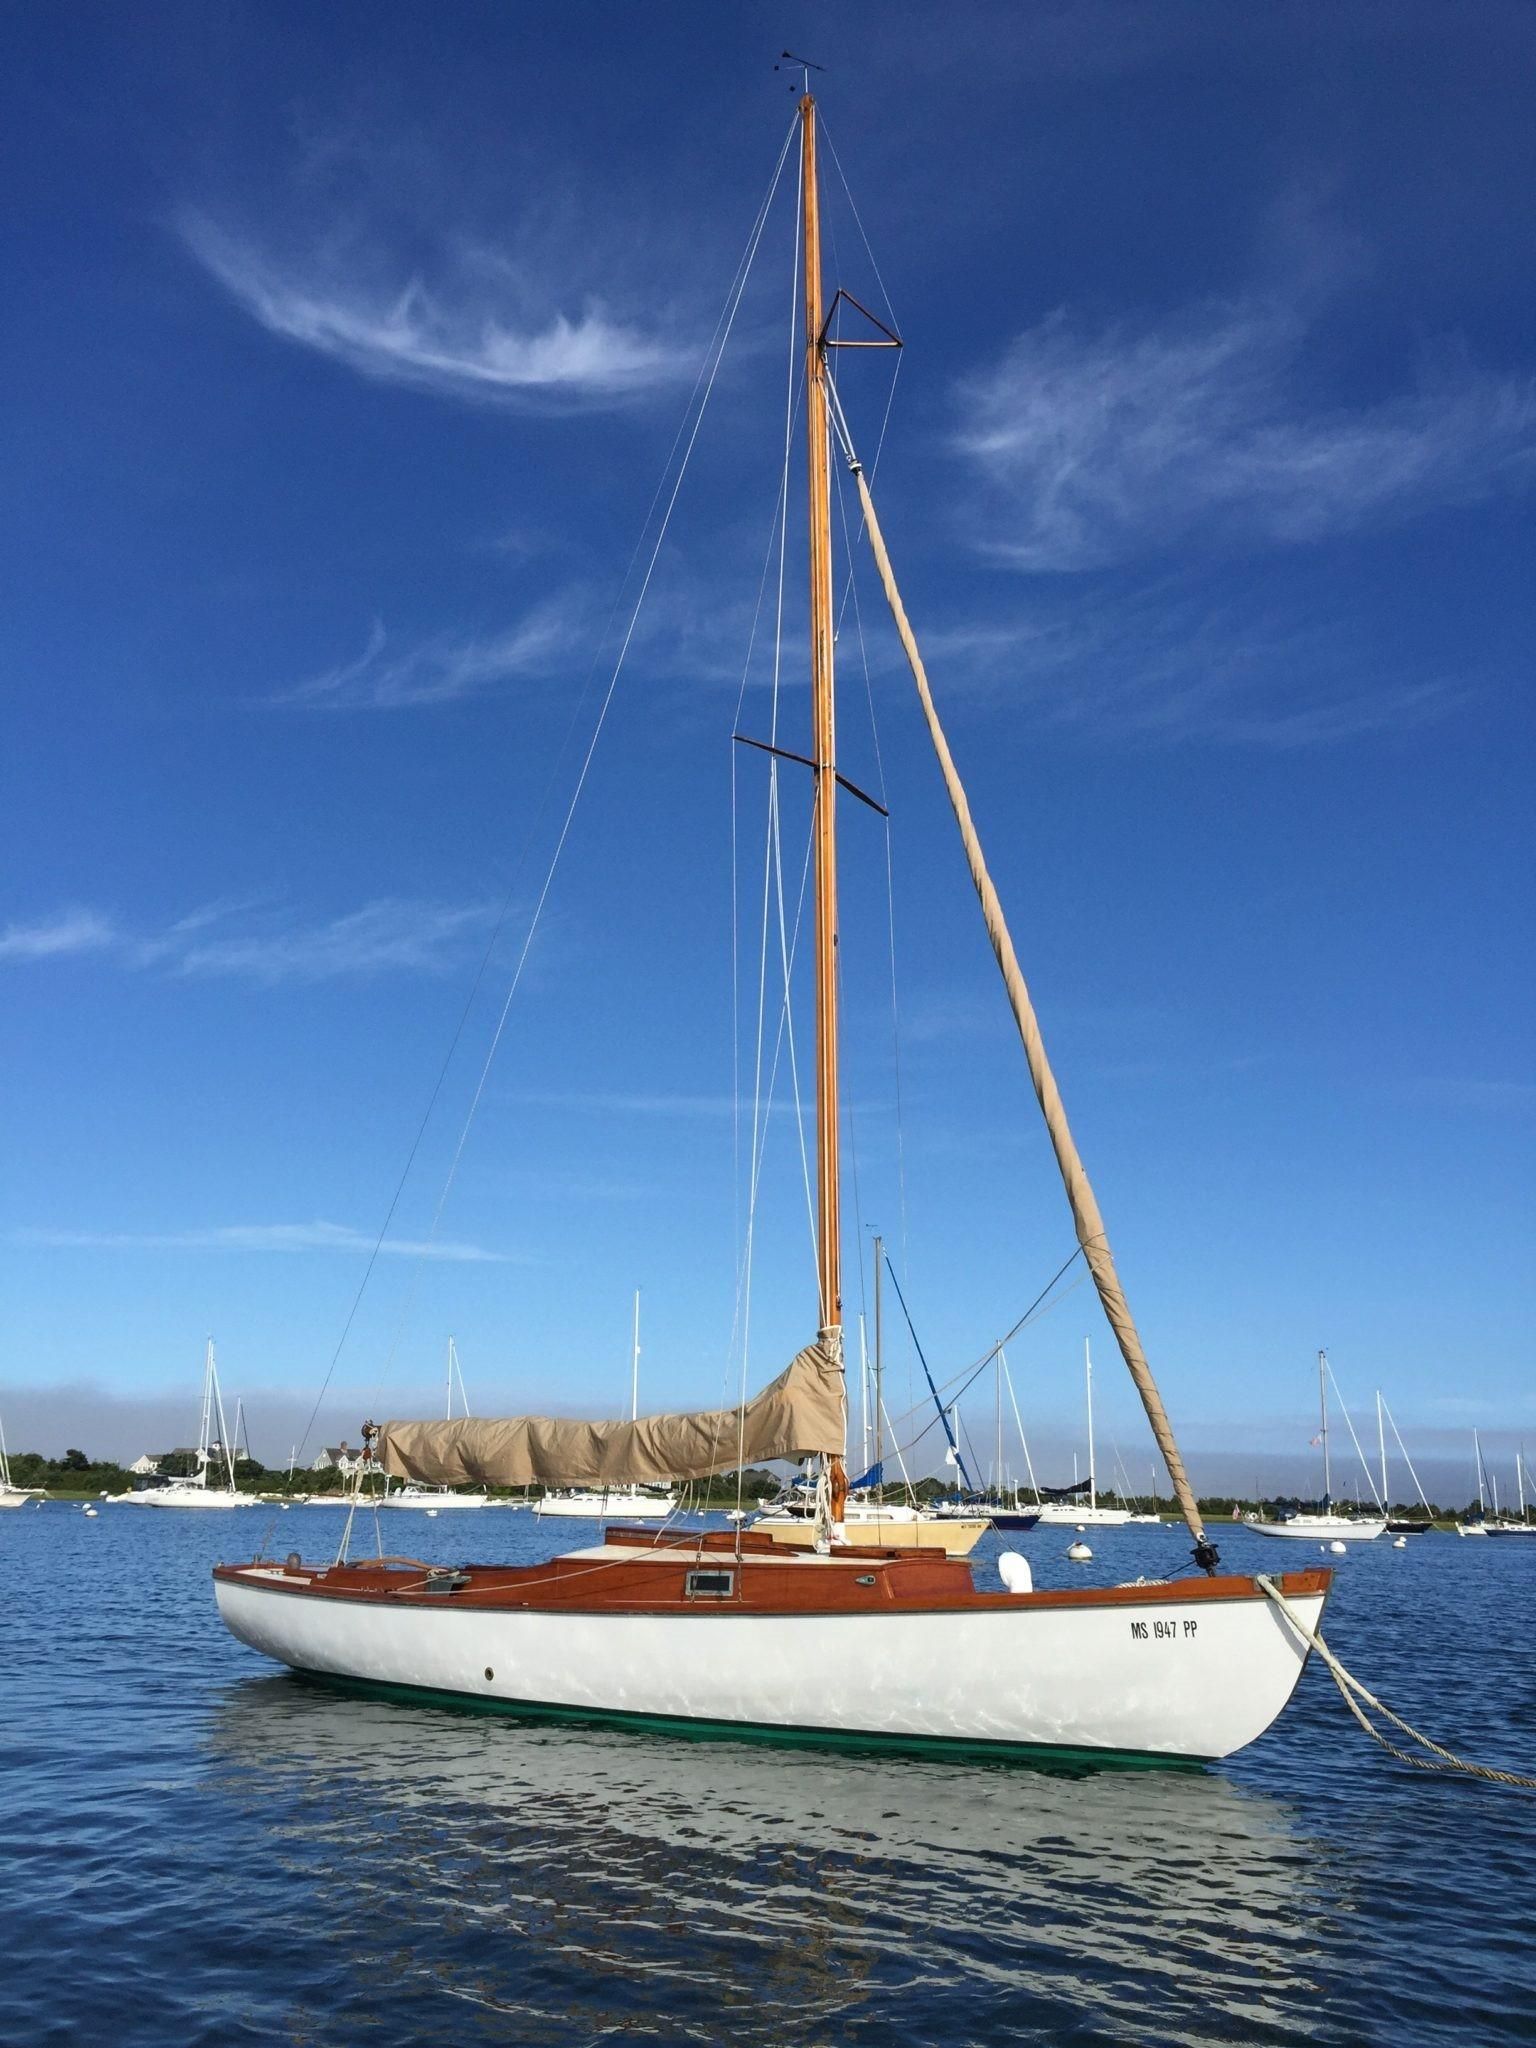 daysailer sailboats for sale